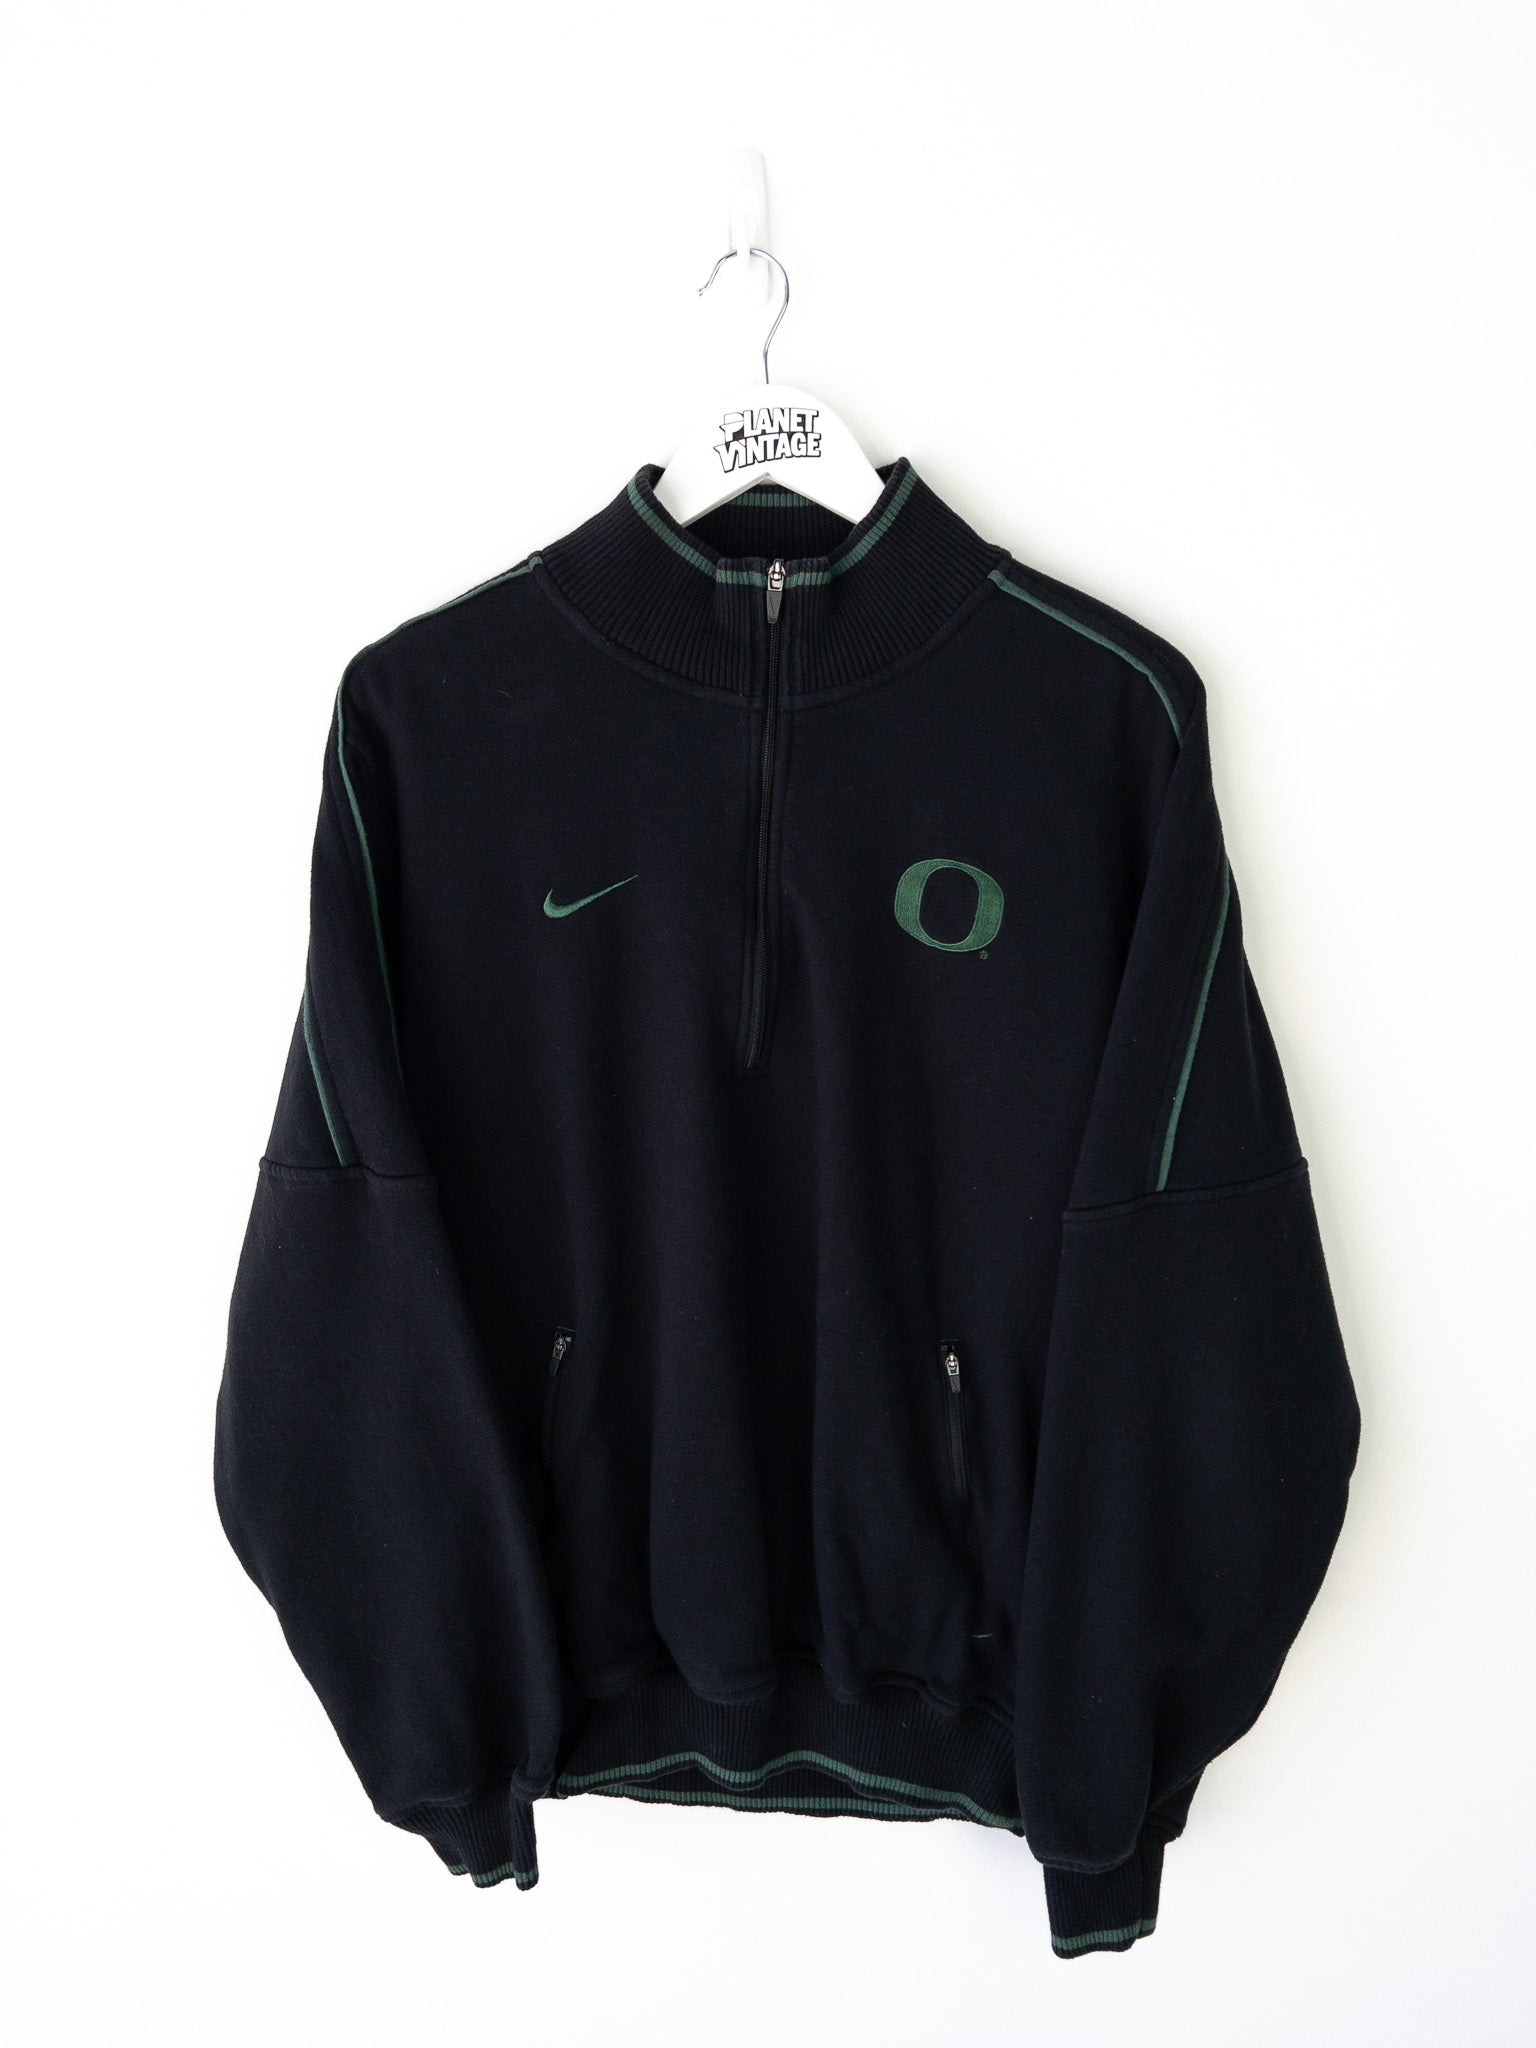 Vintage Oregon Ducks Nike Quarter Zip Sweatshirt (M)